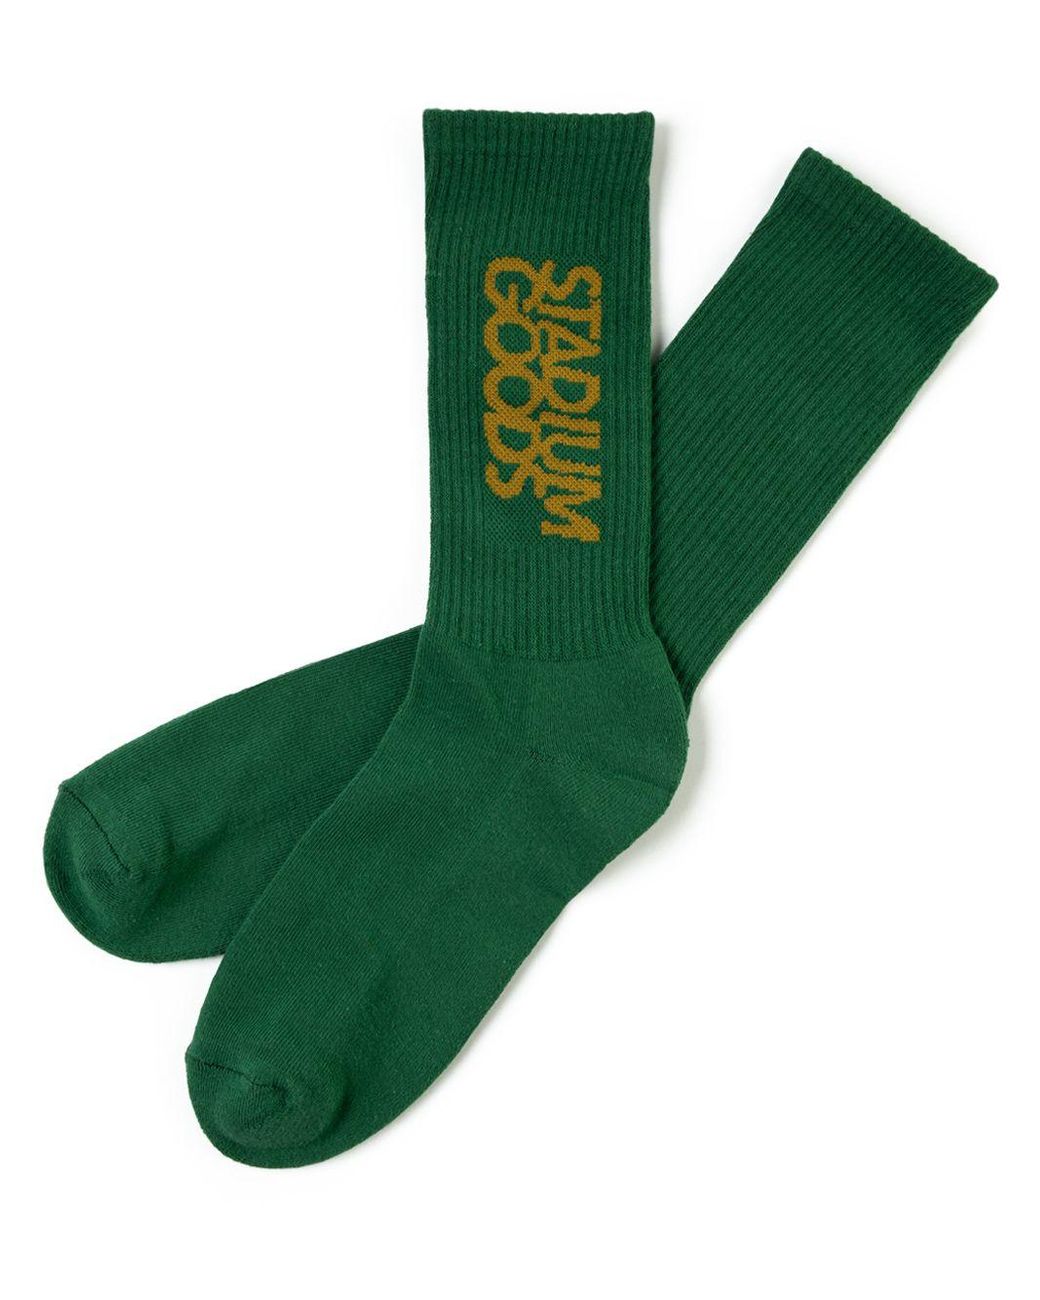 Stadium Goods Cotton Embroidered Logo Socks in Green for Men - Lyst